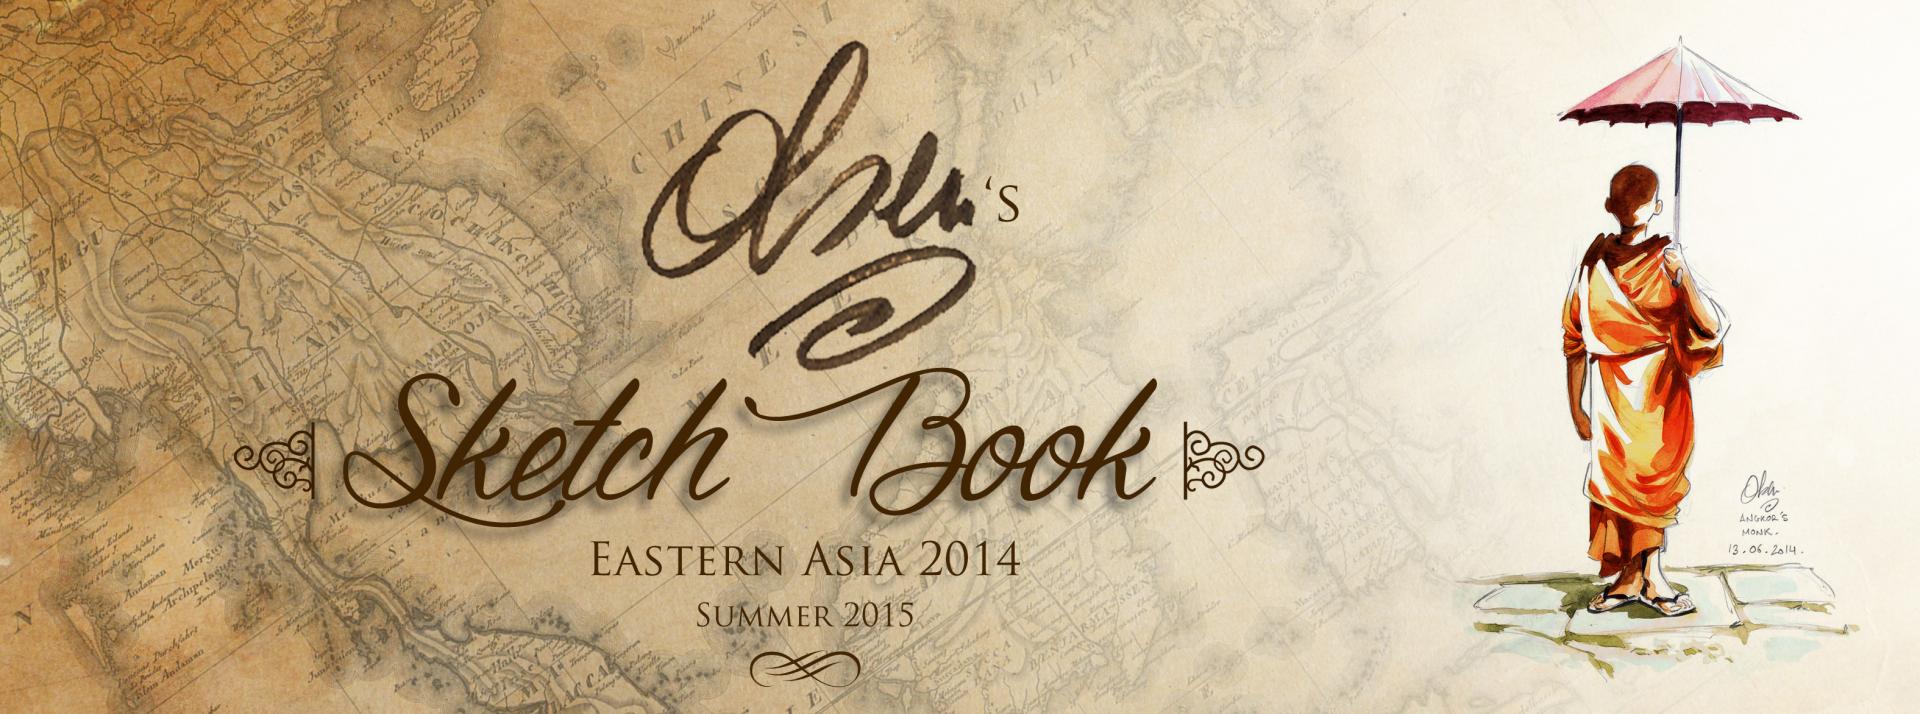 Sketch Book - Eastern Asia - 2014